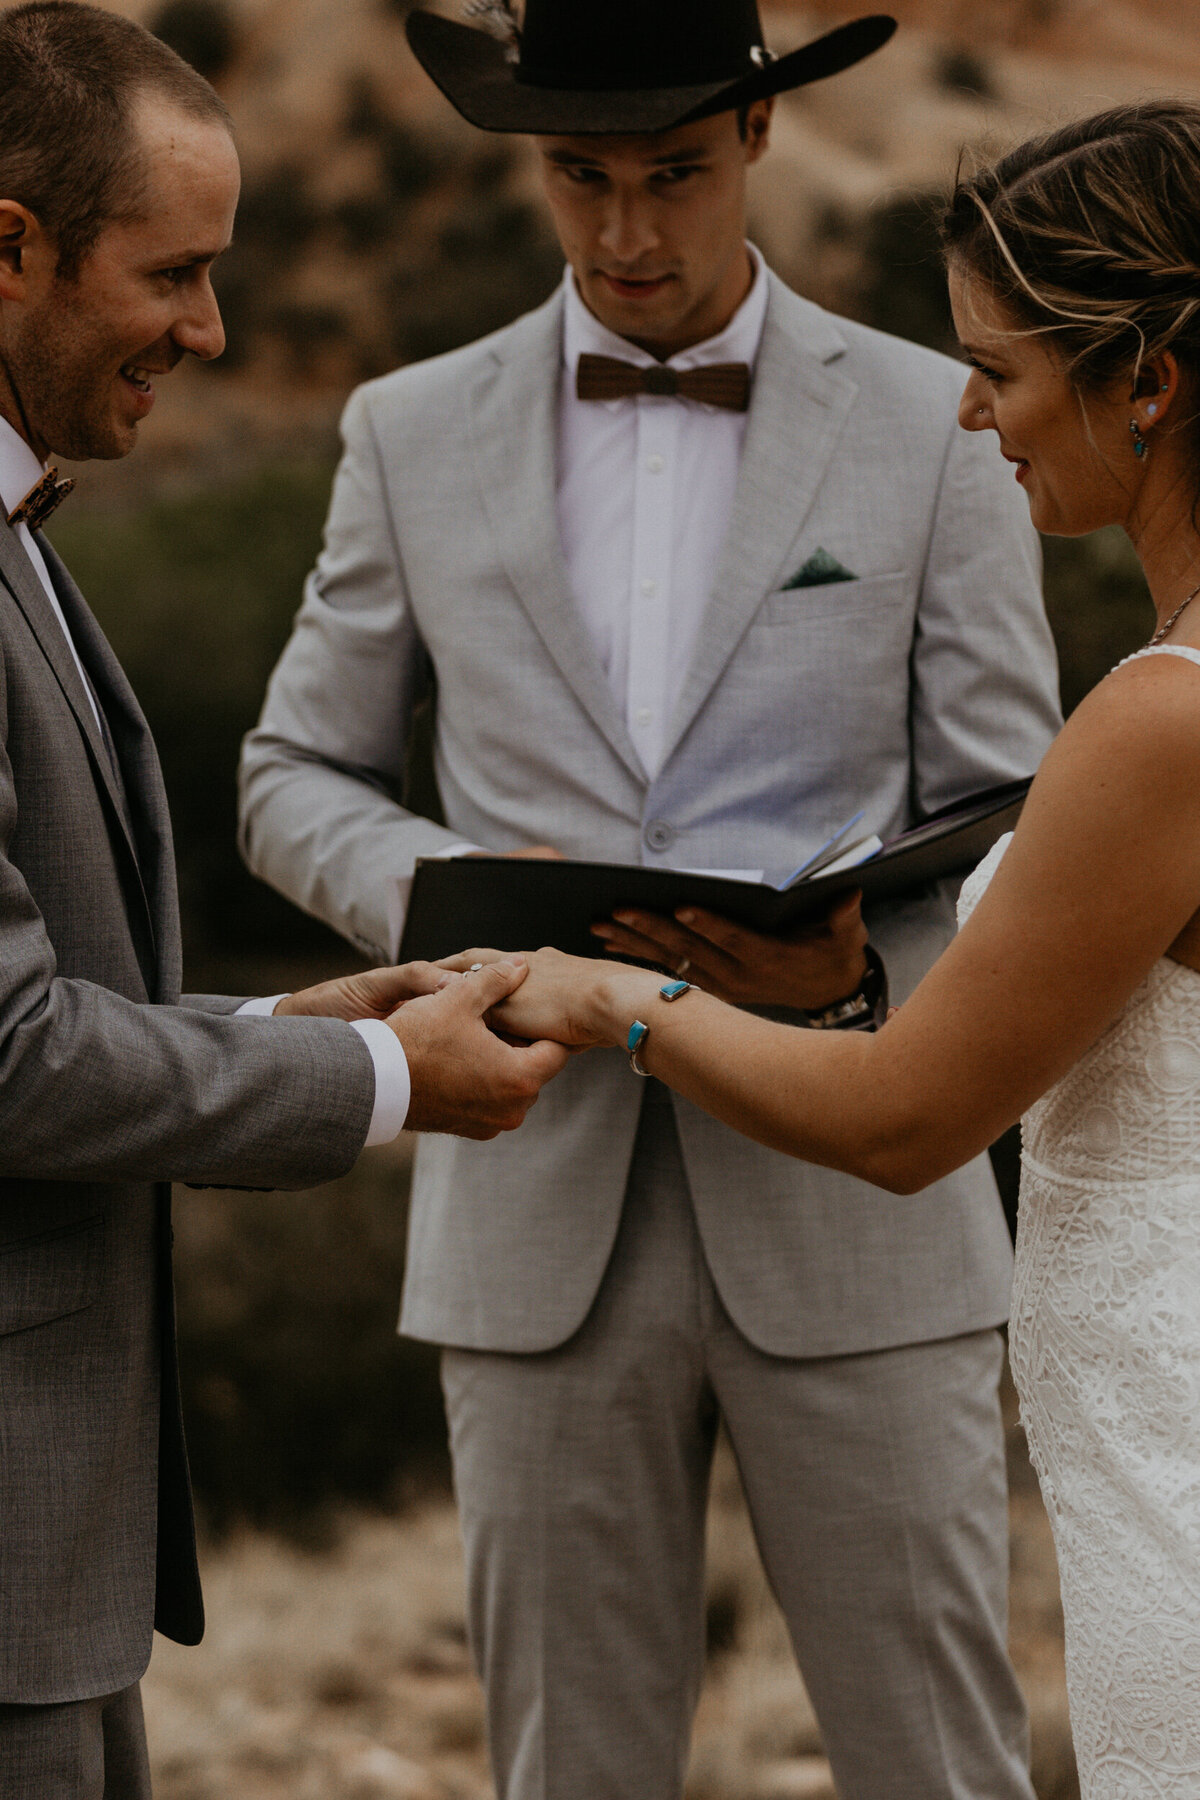 ring exchange during intimate wedding ceremony